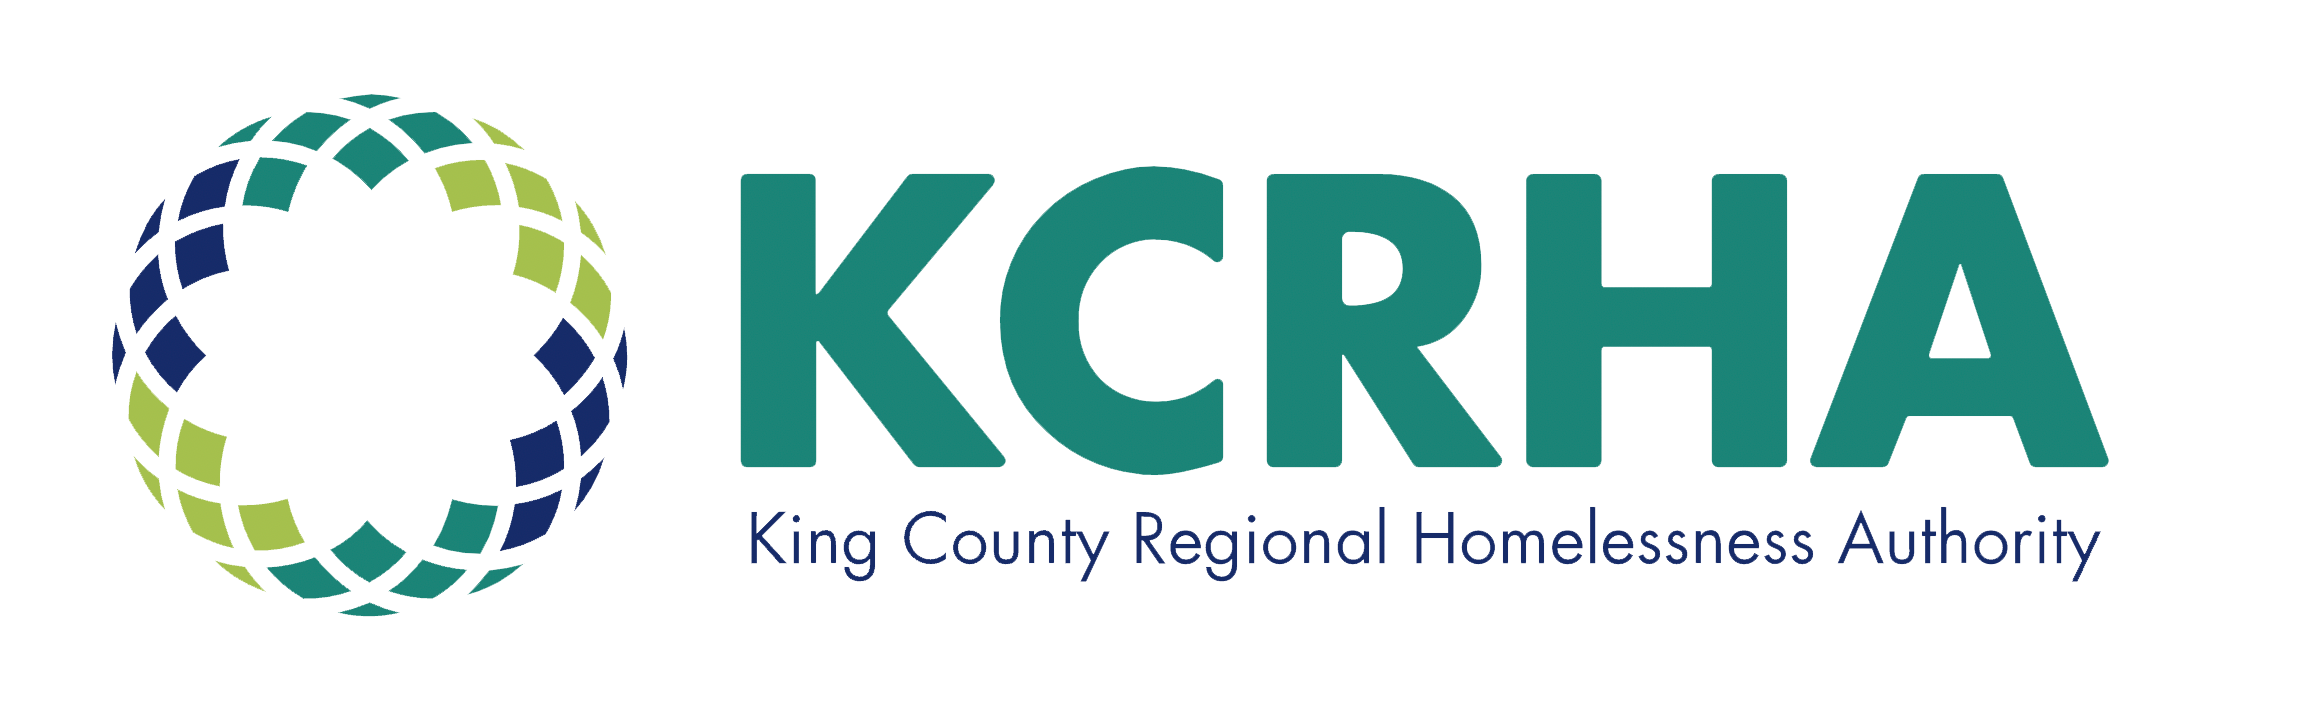 King County Regional Homelessness Authority